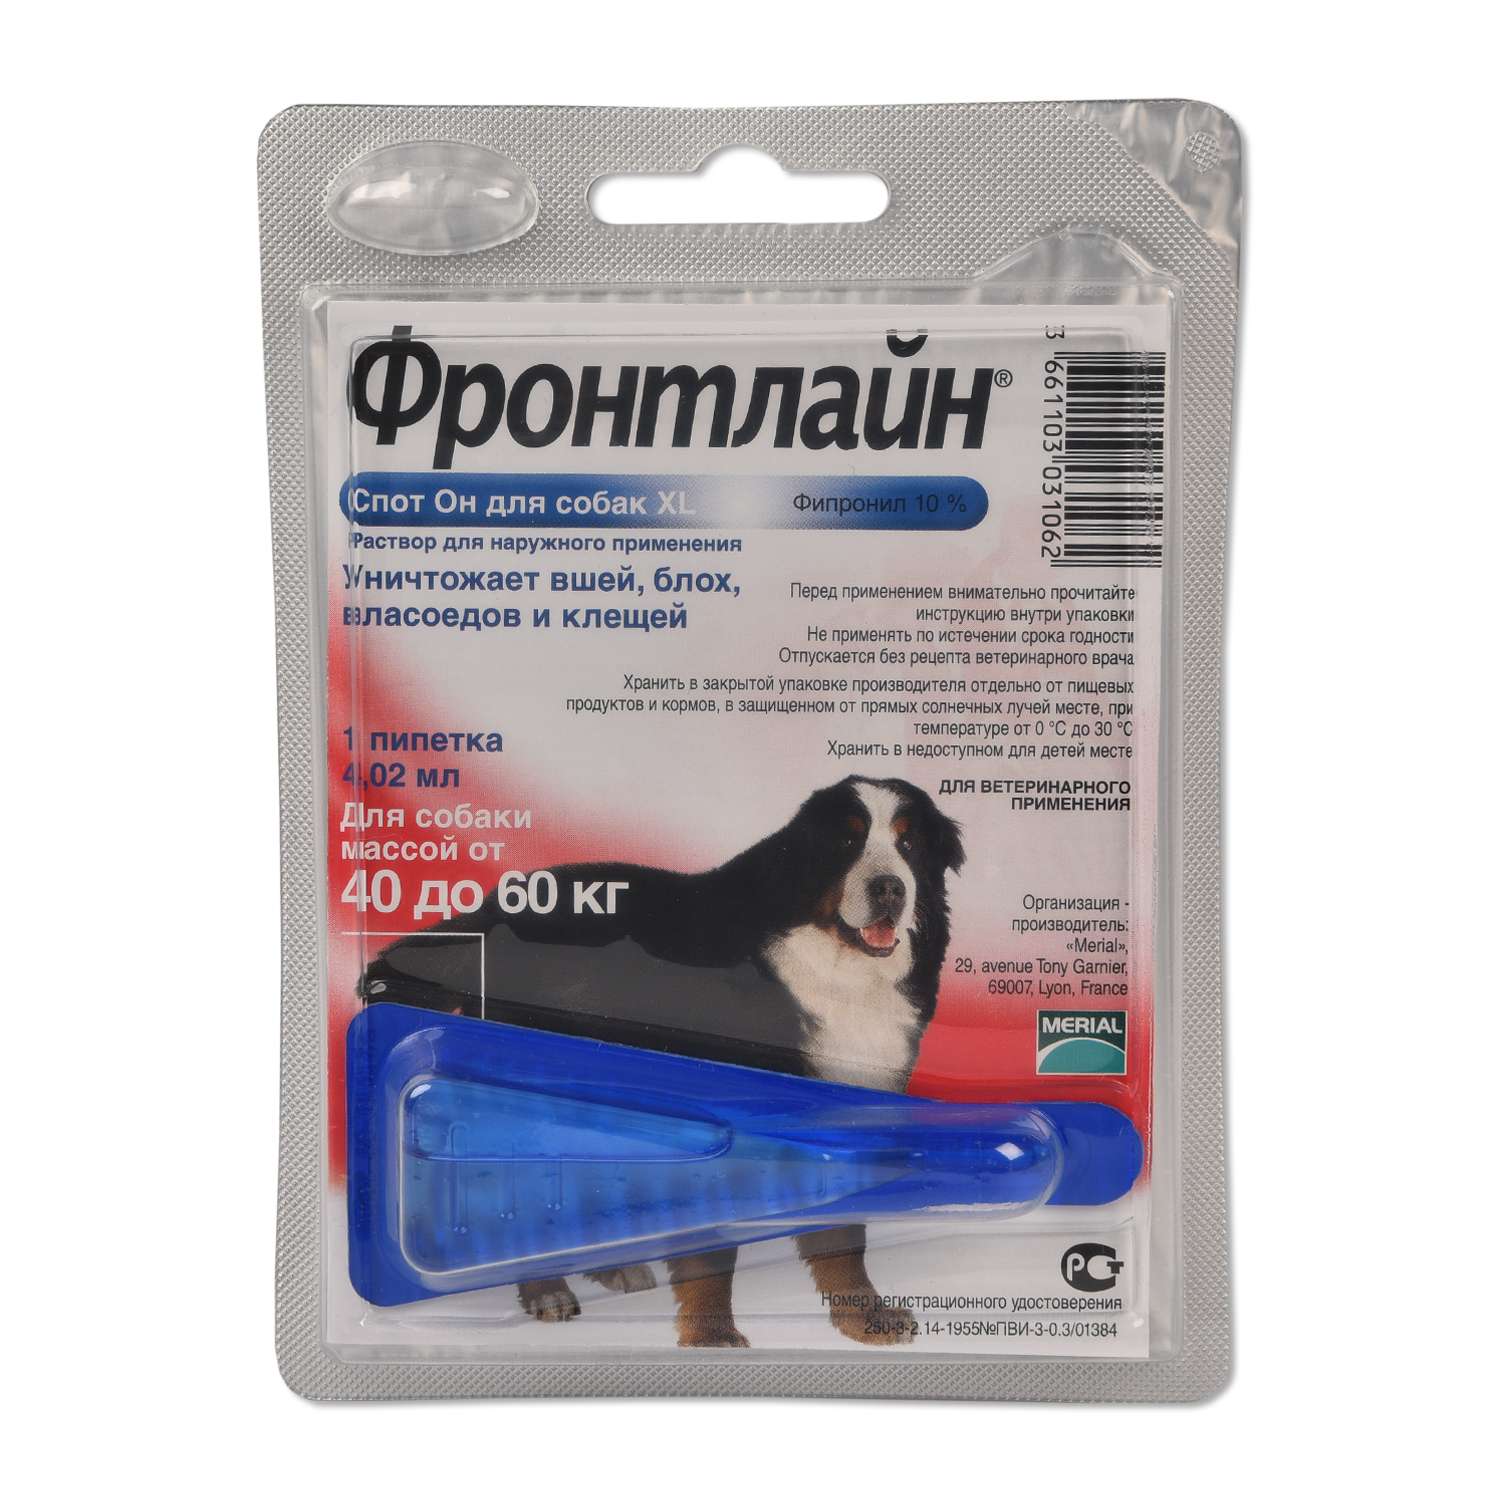 Препарат противопаразитарный для собак Boehringer Ingelheim Фронтлайн Спот-Он XL 4.02г пипетка - фото 1